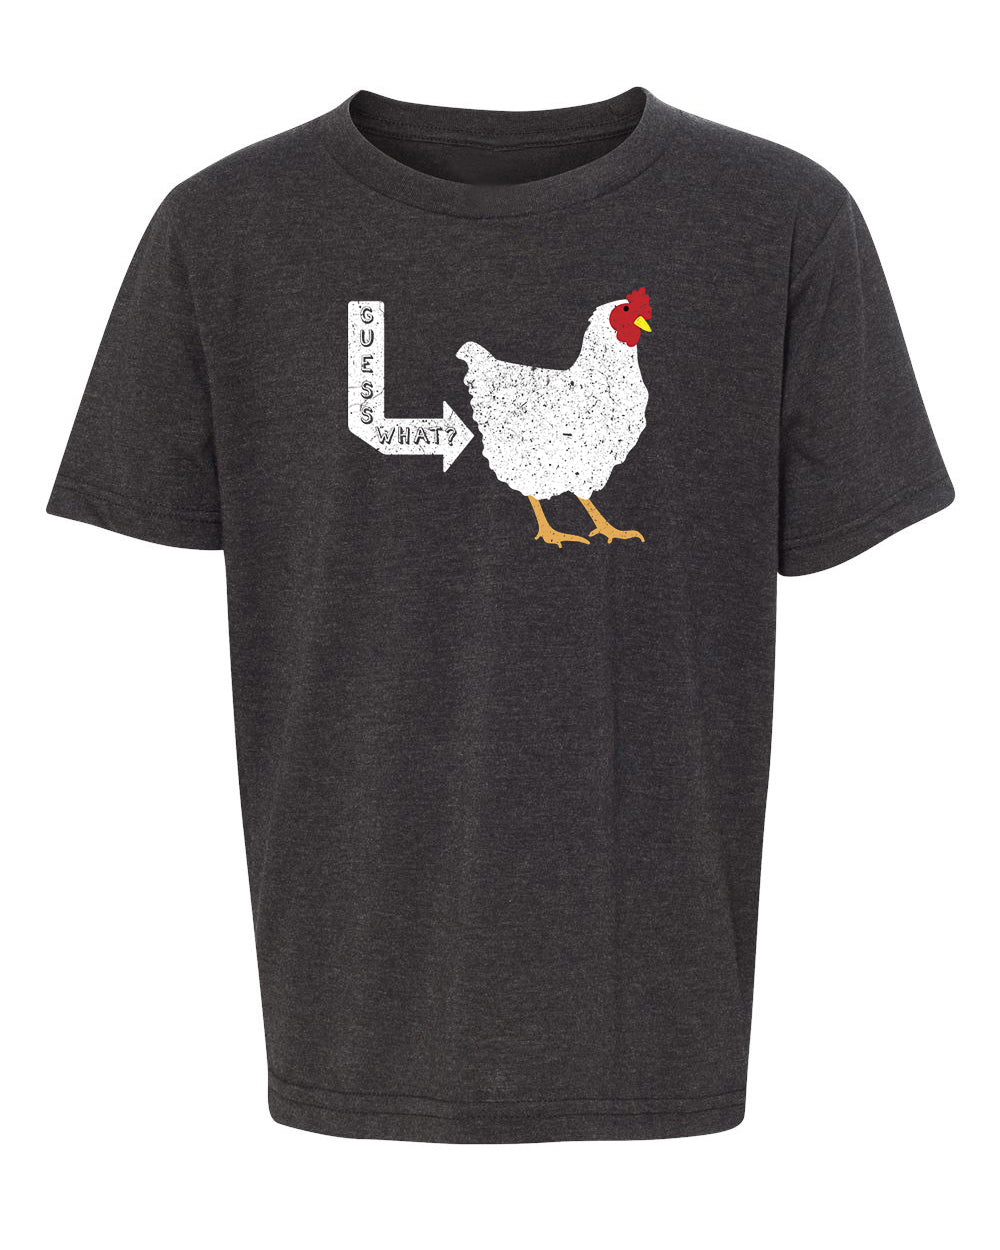 Guess What? Chicken Butt Kids T Shirts - Mato & Hash